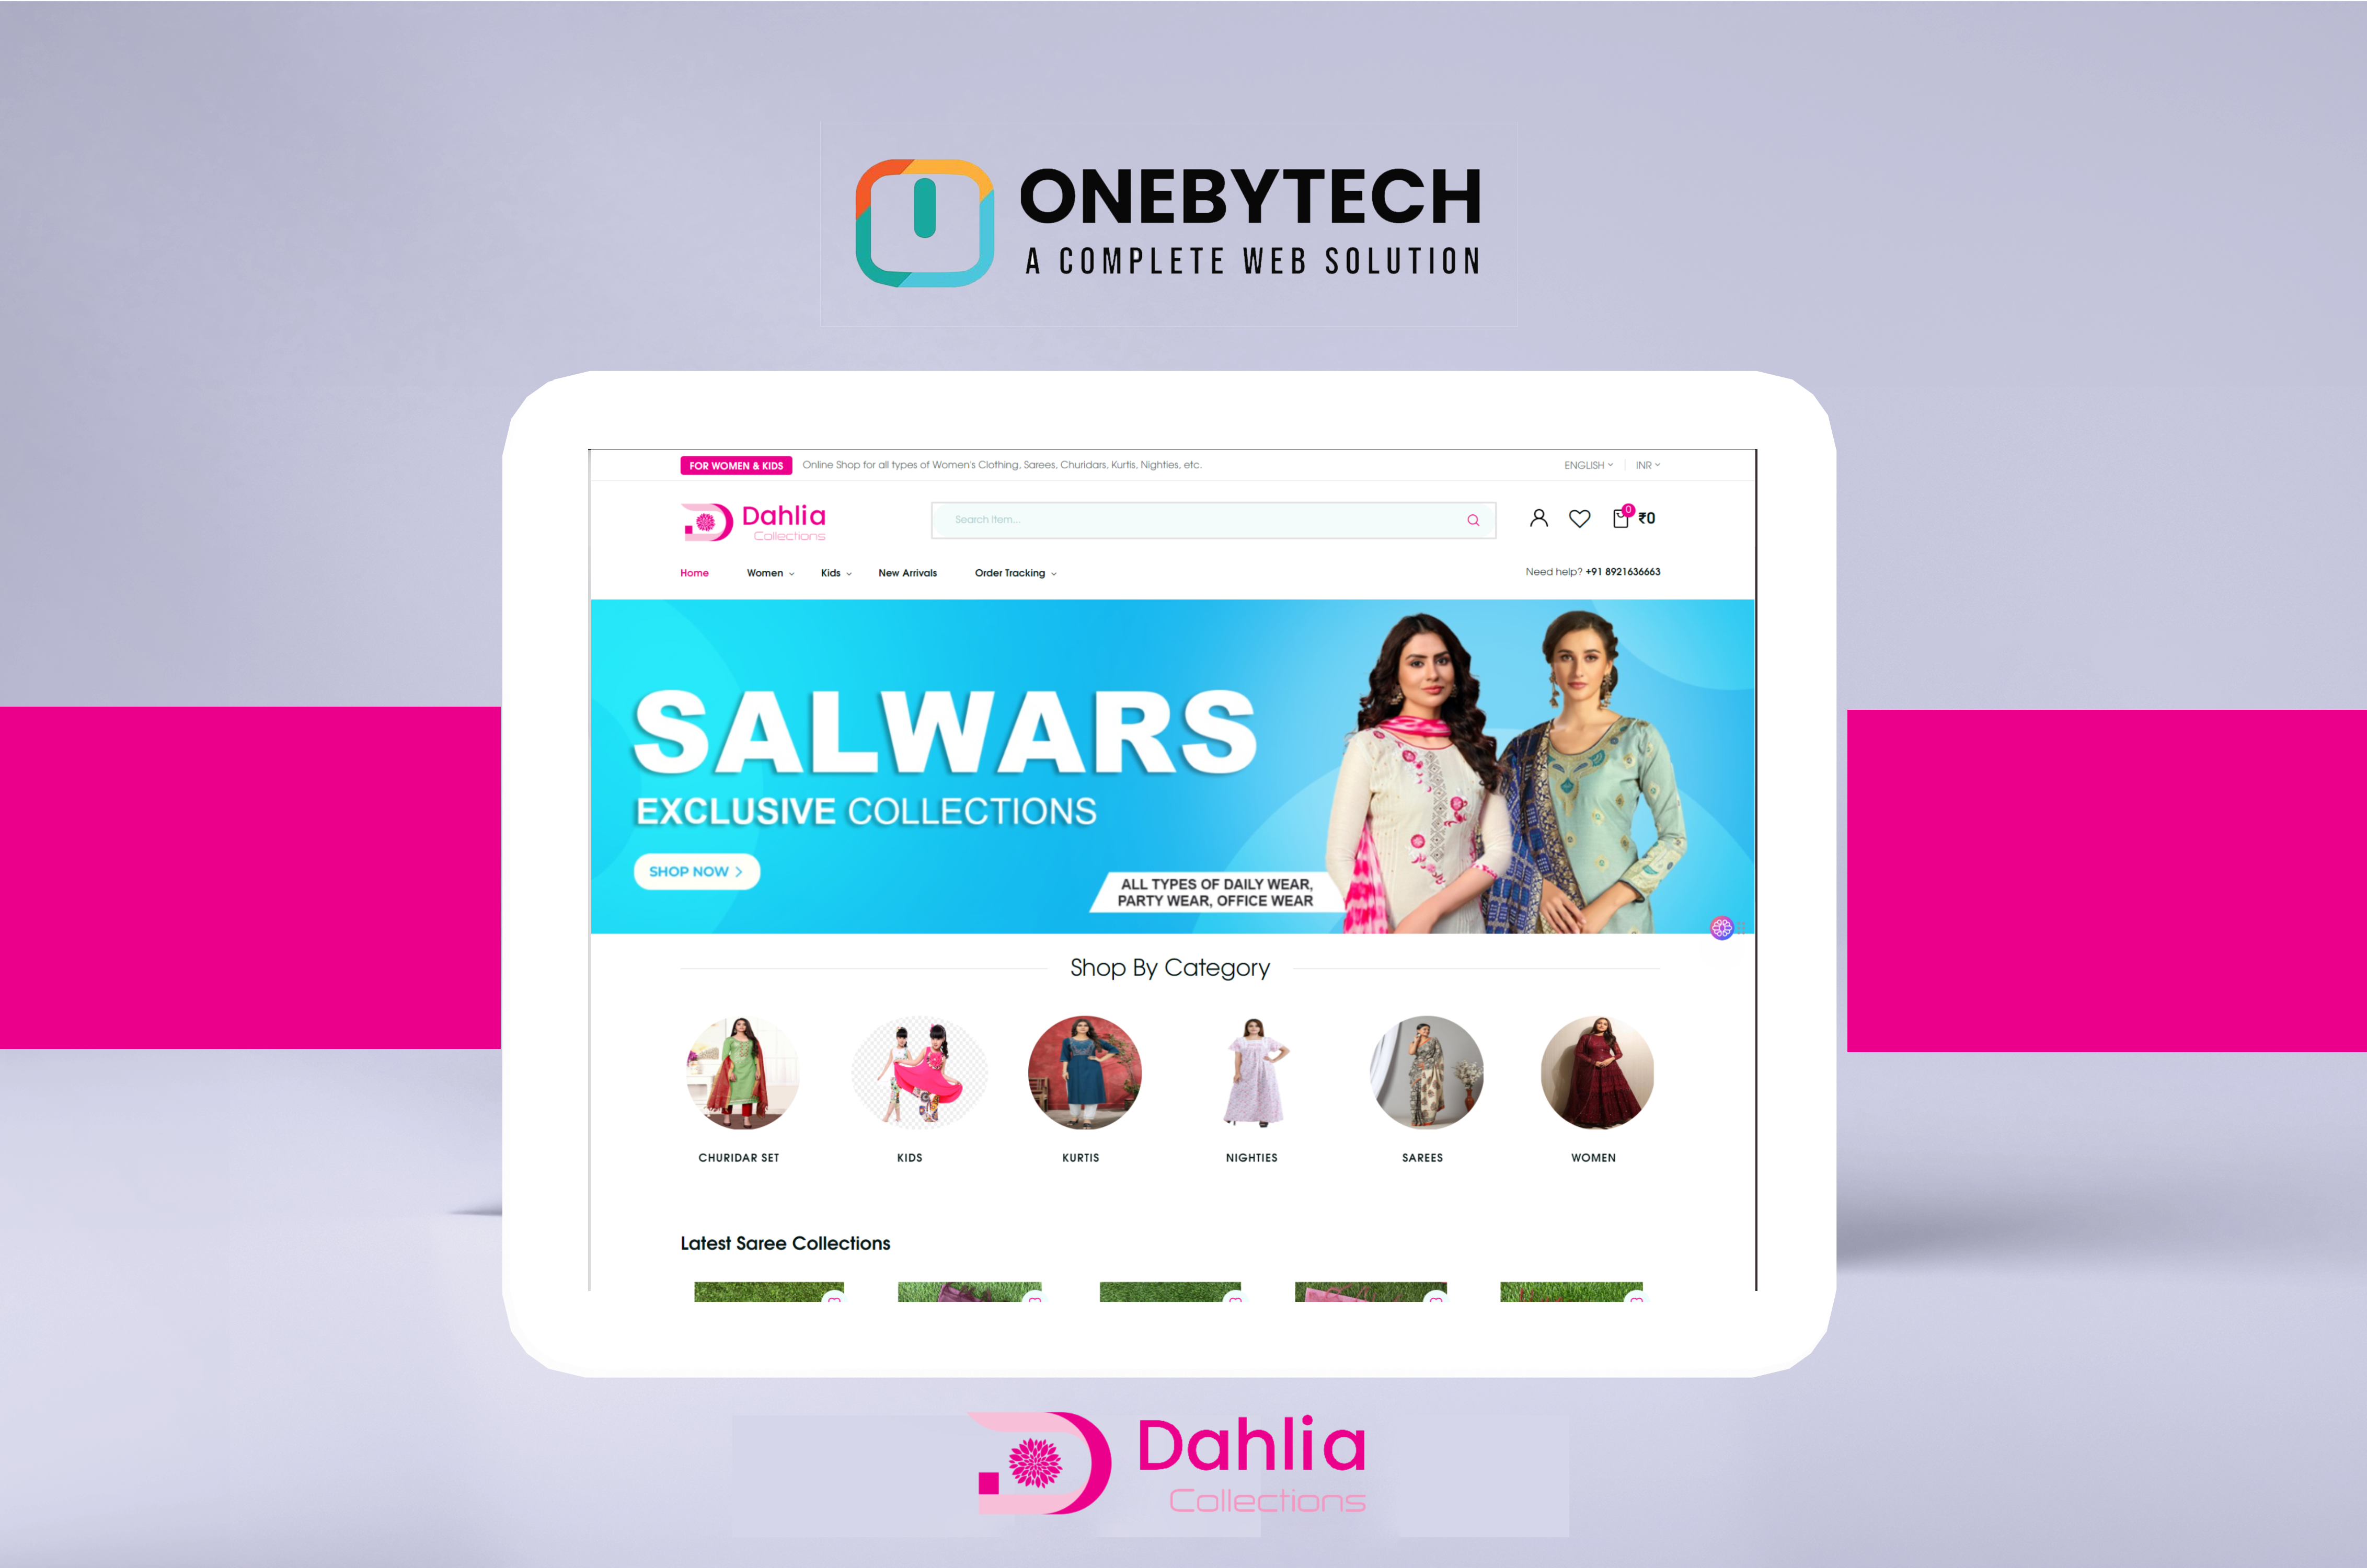 Dahlia Collections – Online Shop for Women’s Clothing, Saree, Churidar, Nighty, Kurtas, Shawls, etc